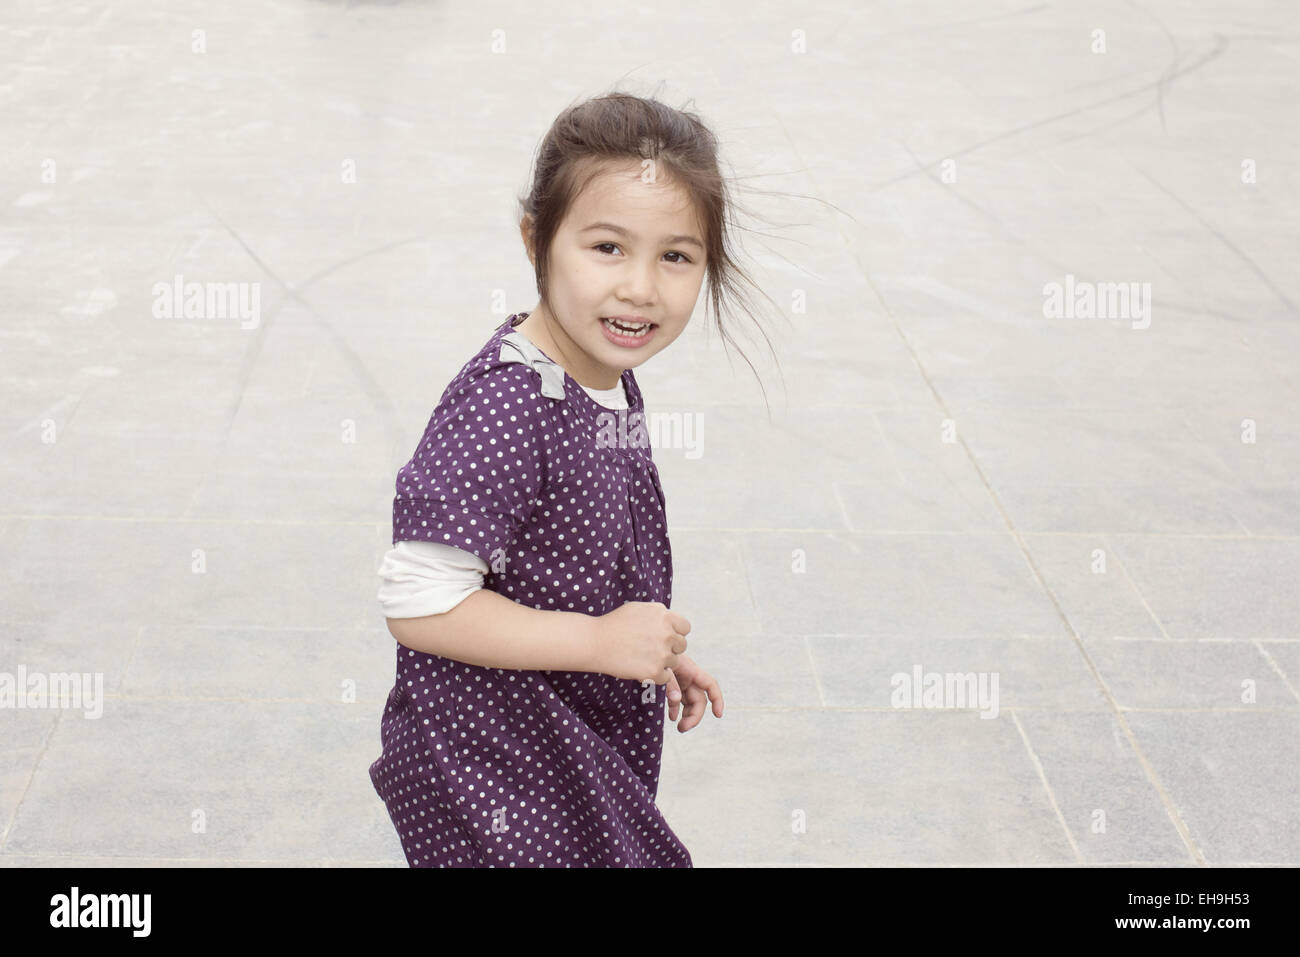 Little girl smiling outdoors Stock Photo